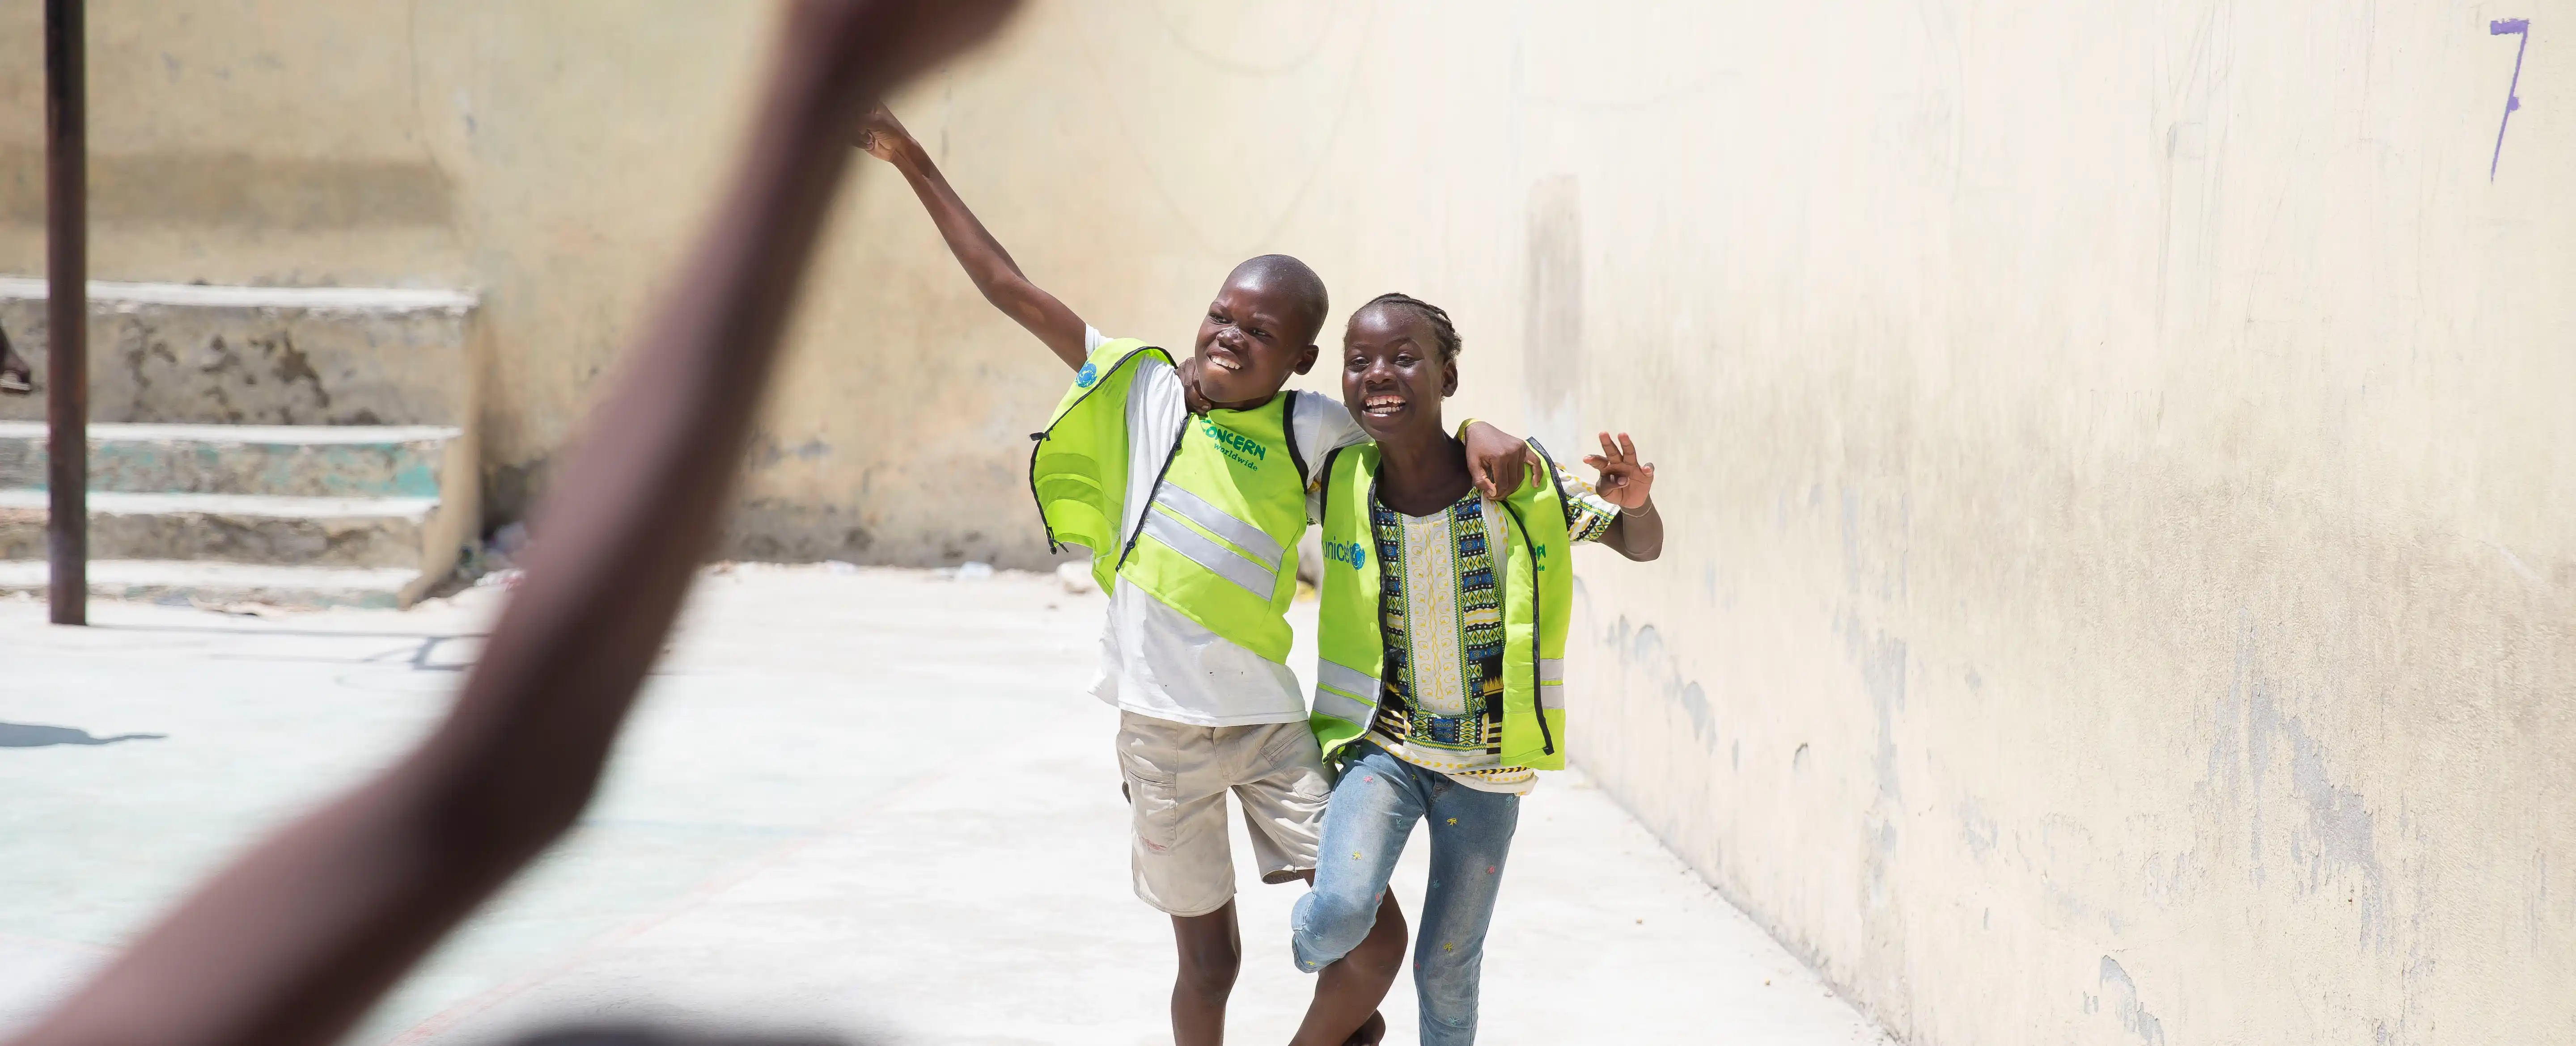 2 children in Haiti.